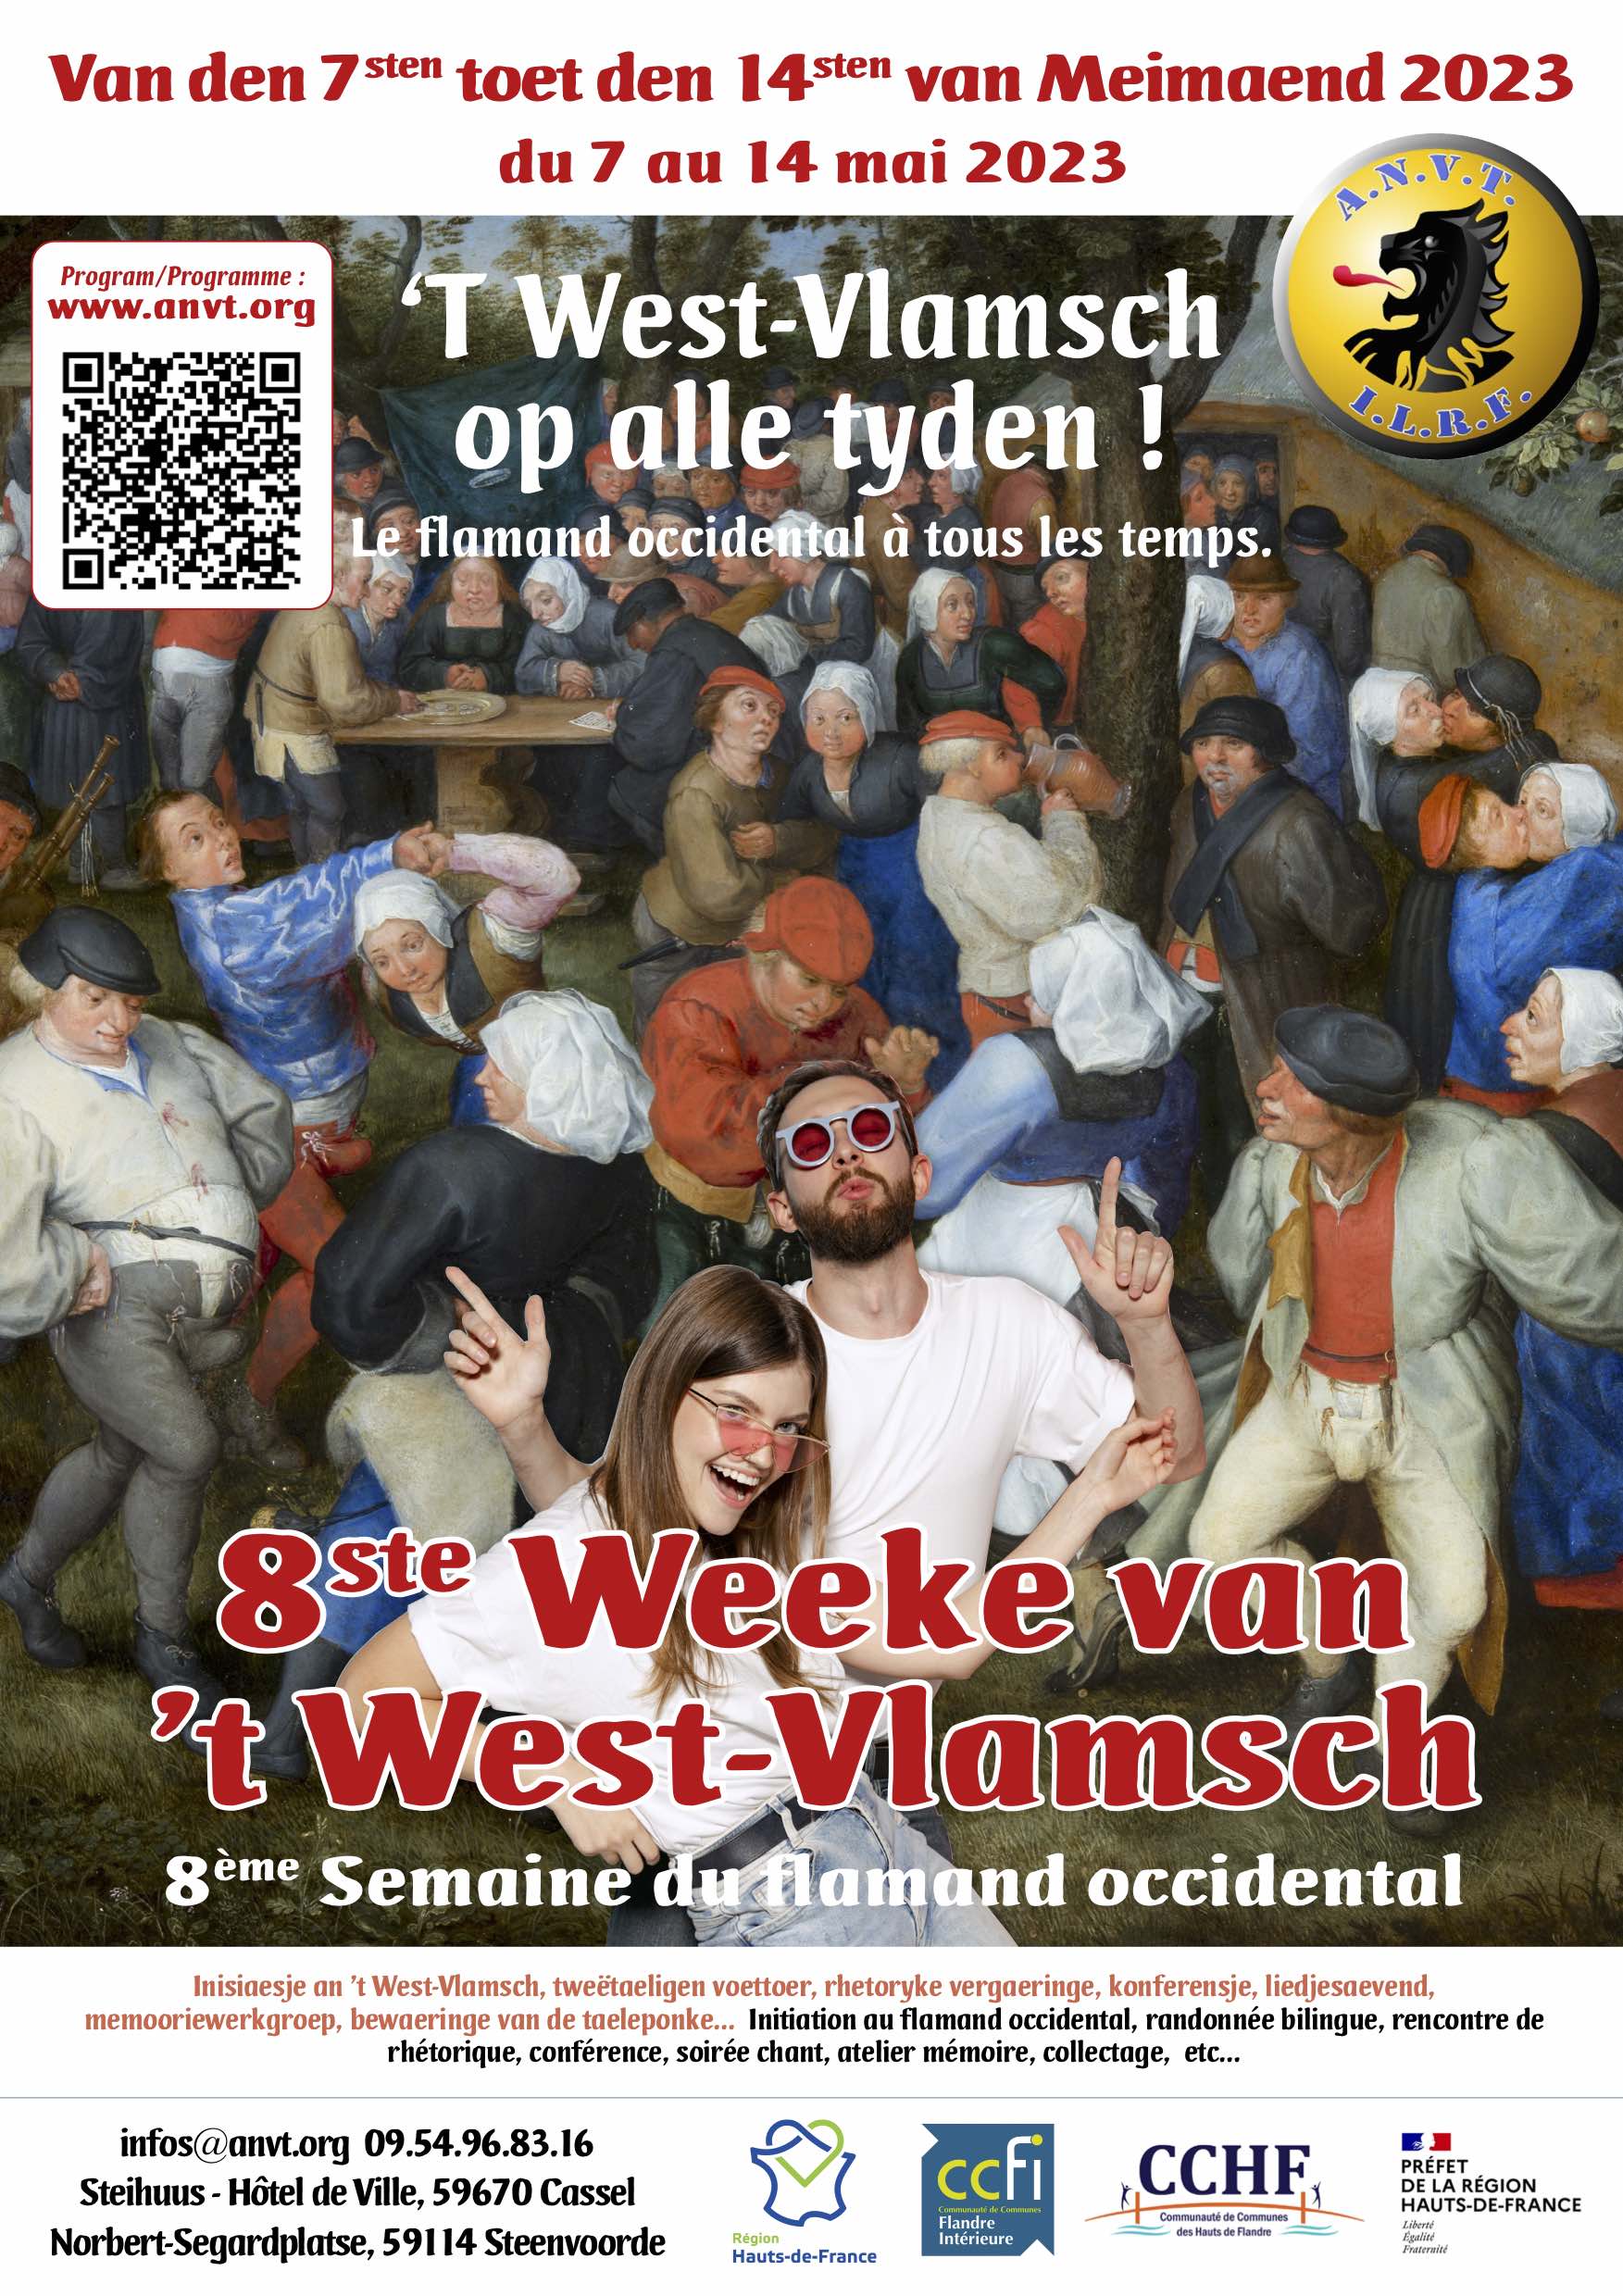 Programme 8ème Semaine du flamand occidental